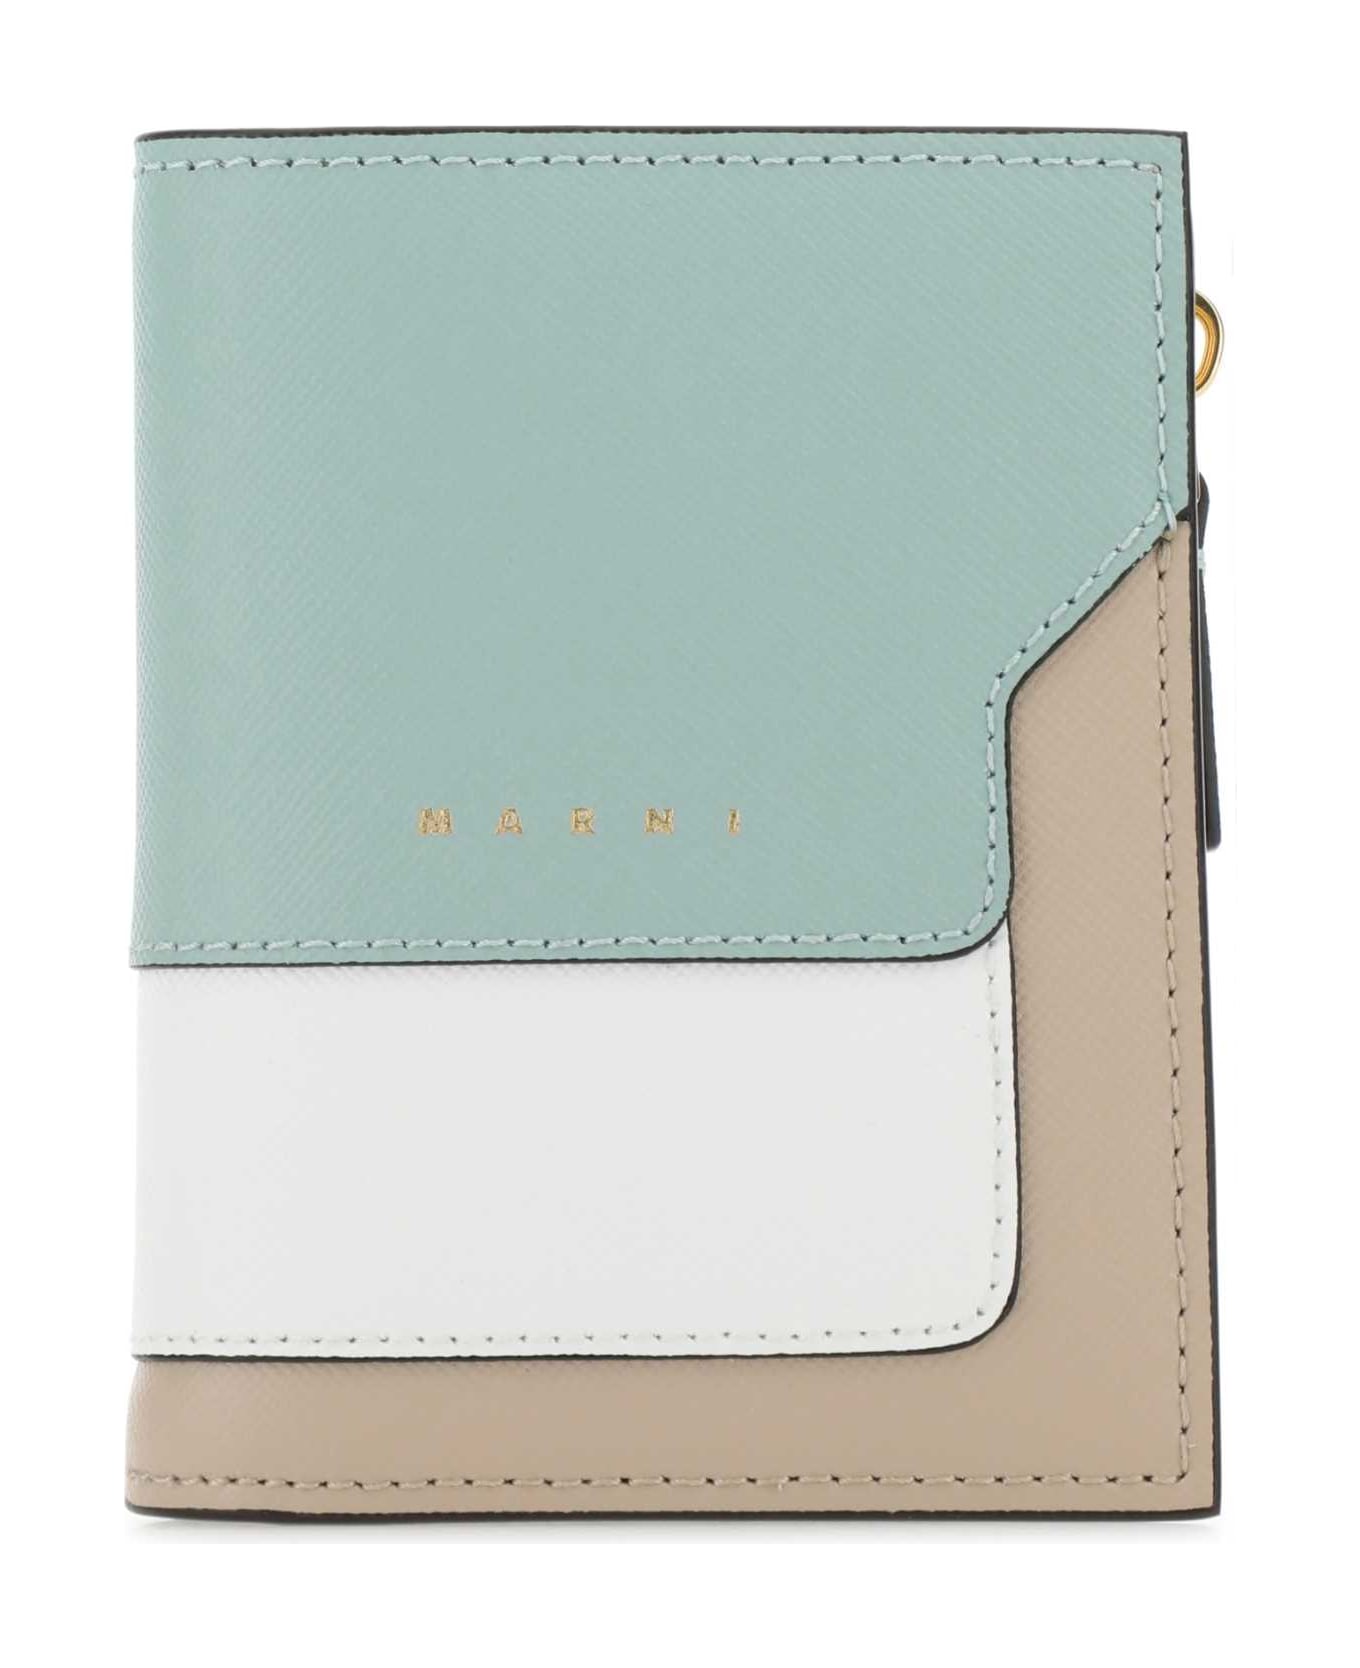 Marni Multicolor Leather Wallet - Z120N